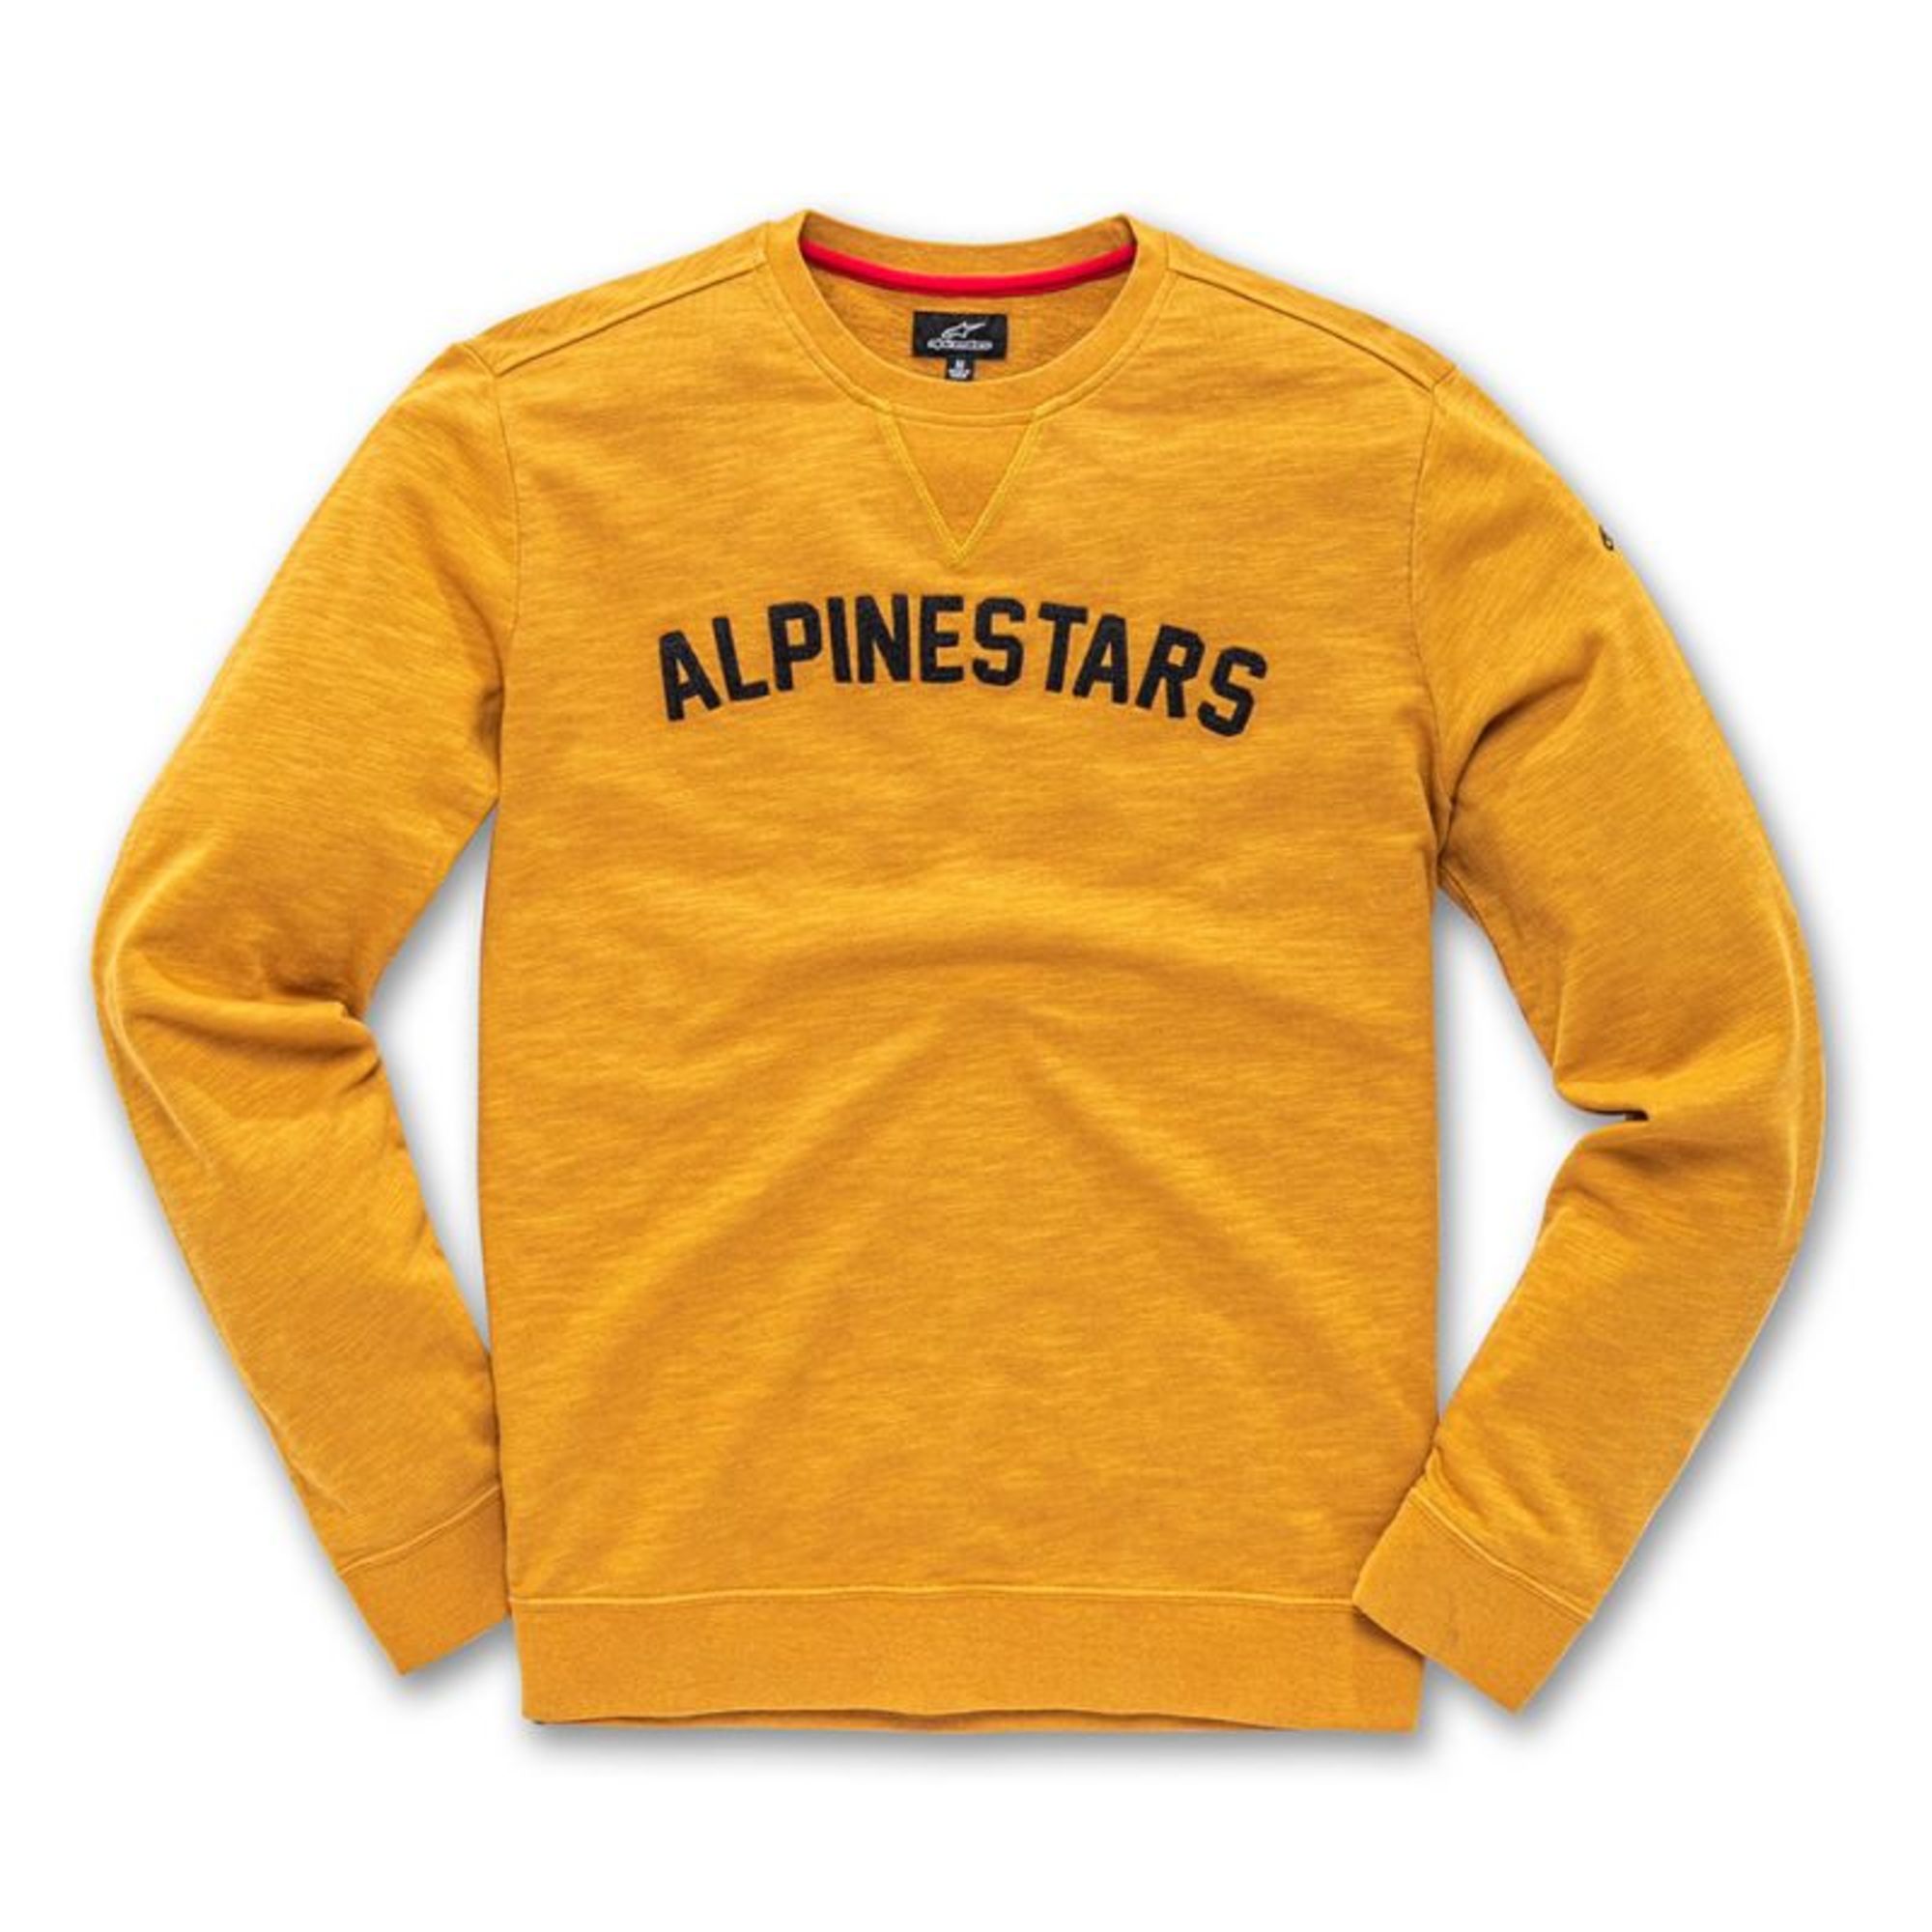 alpinestars long sleeve shirts for men judgefor ment